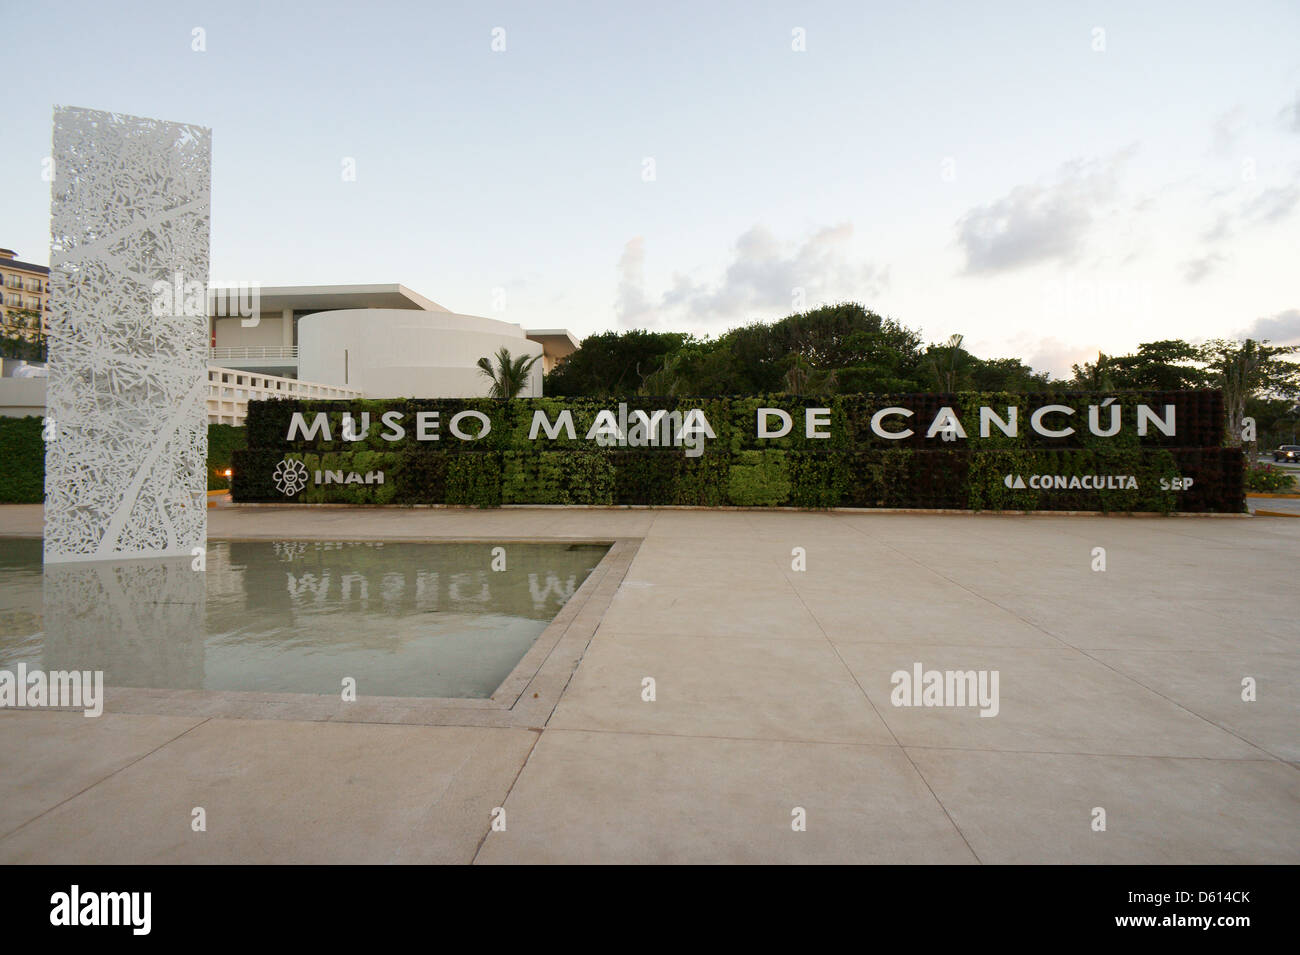 Das neue Museo Maya de Cancun oder Cancun Maya Museum, das im November 2012 eröffnete, Cancun, Mexiko Stockfoto